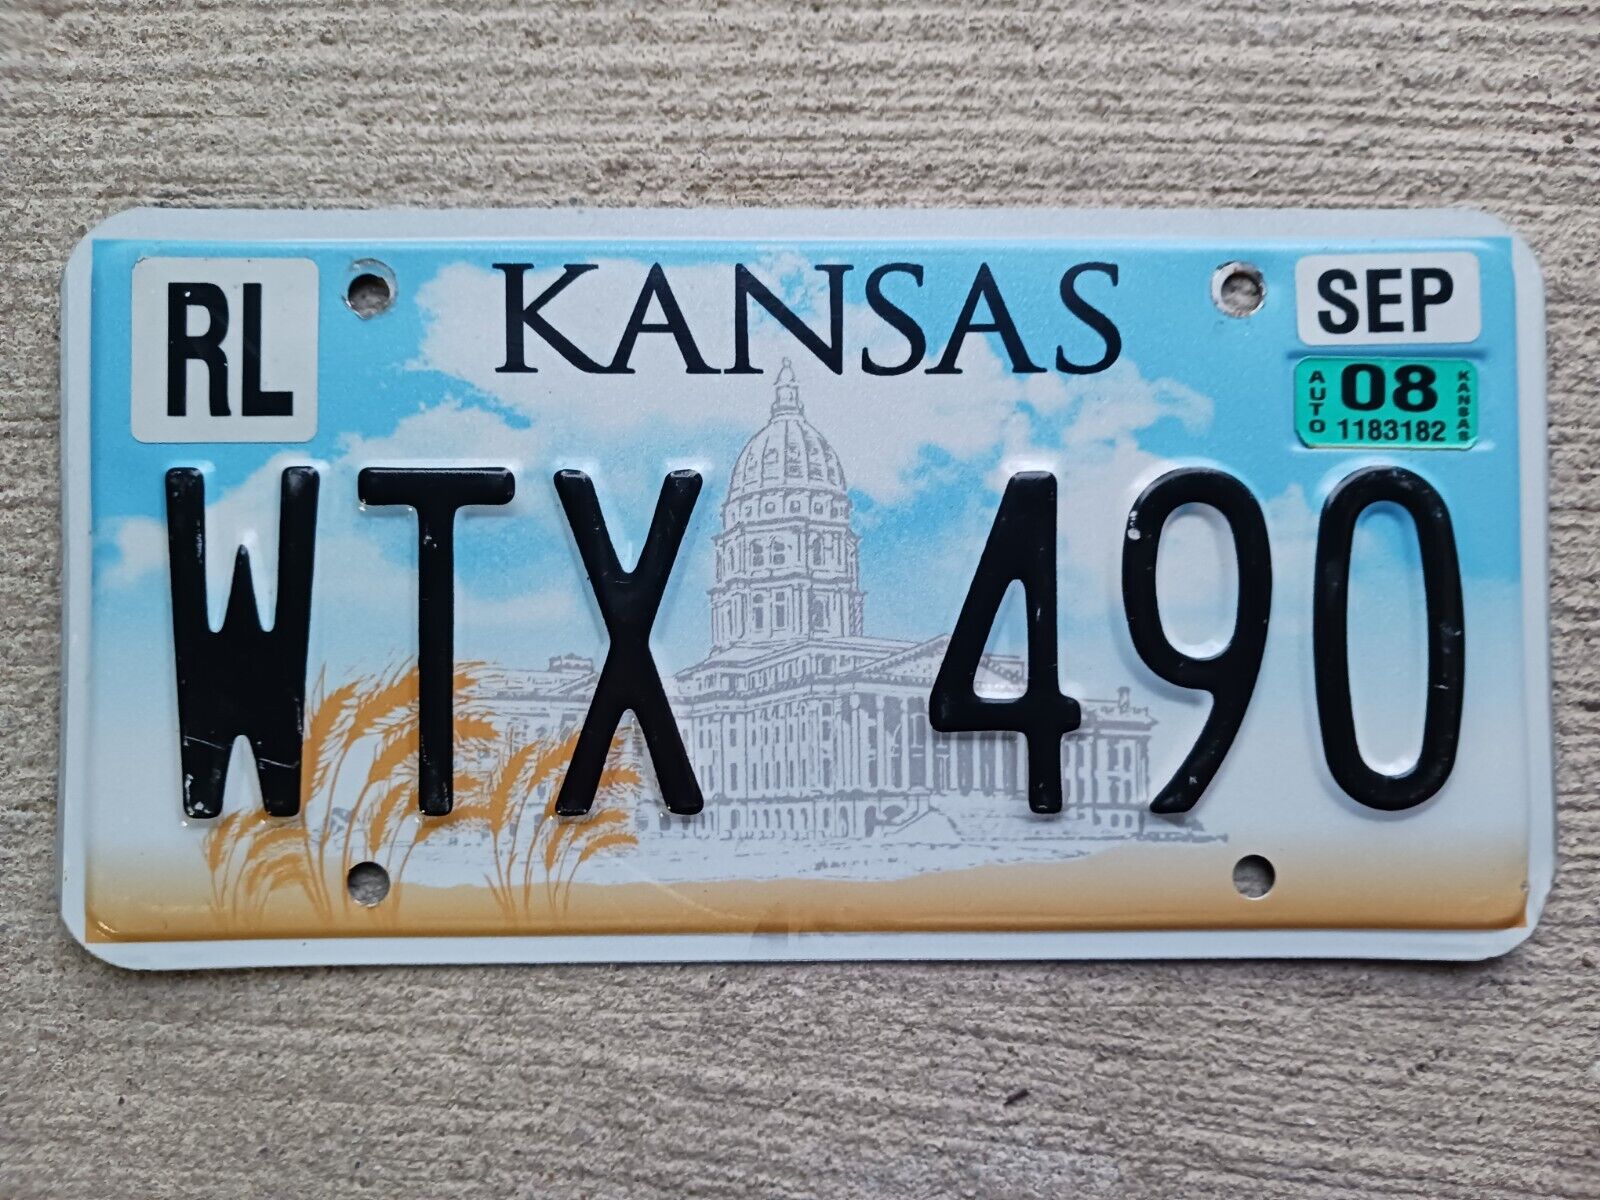 2008 Kansas License Plate WTX 490